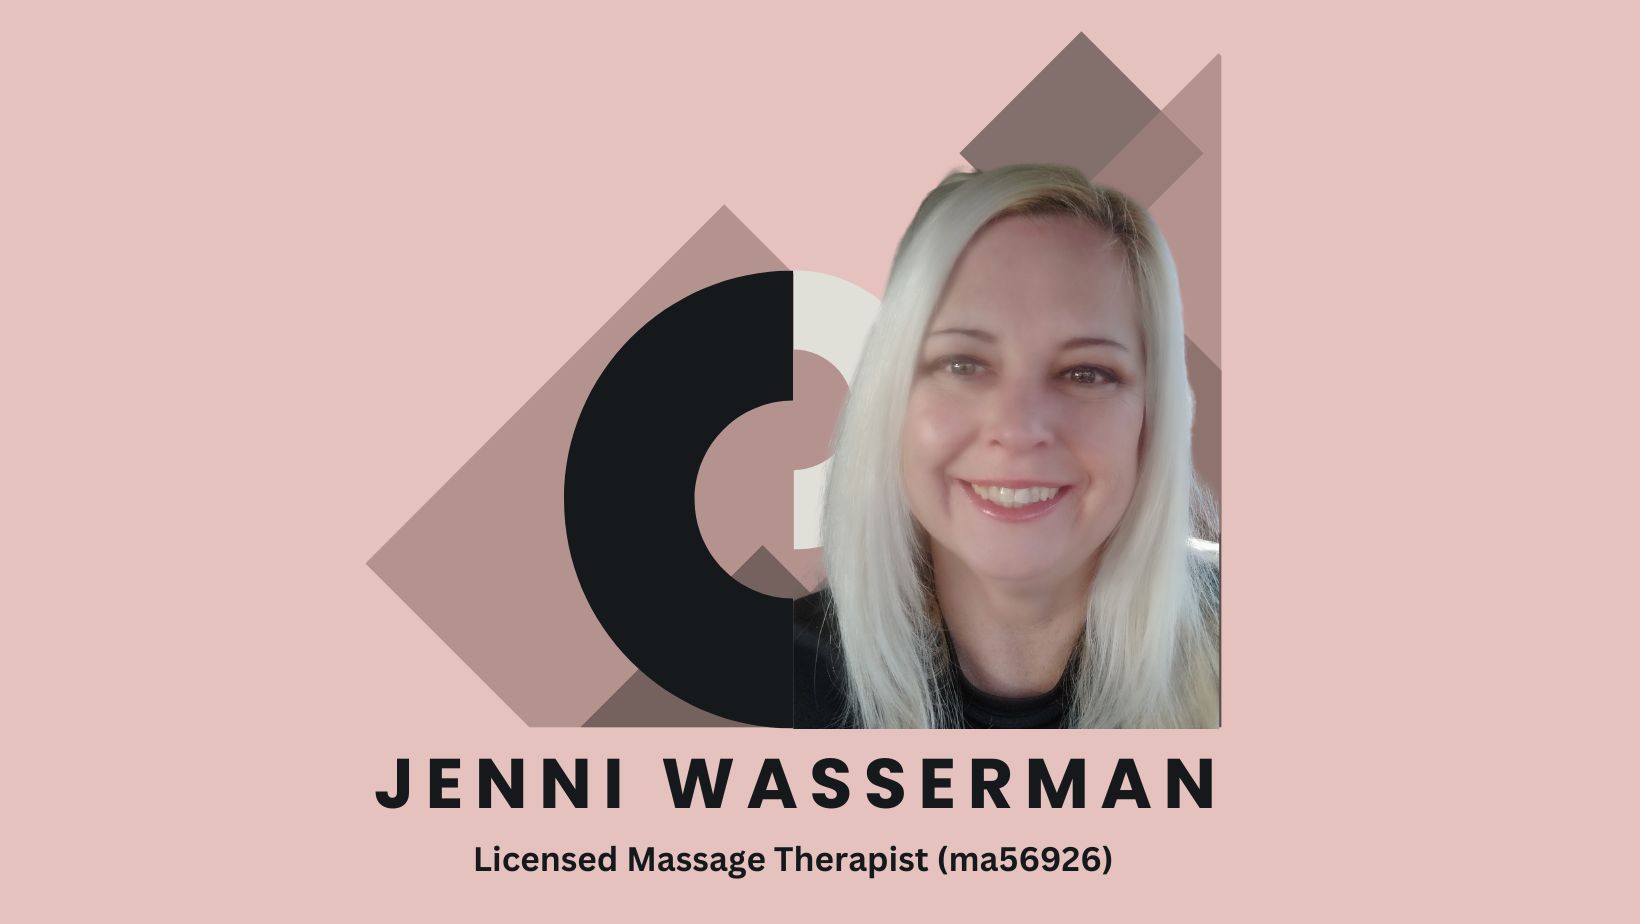 Book a mobile massage with Jenni Wasserman Mobile Massage therapist serving Jacksonville.